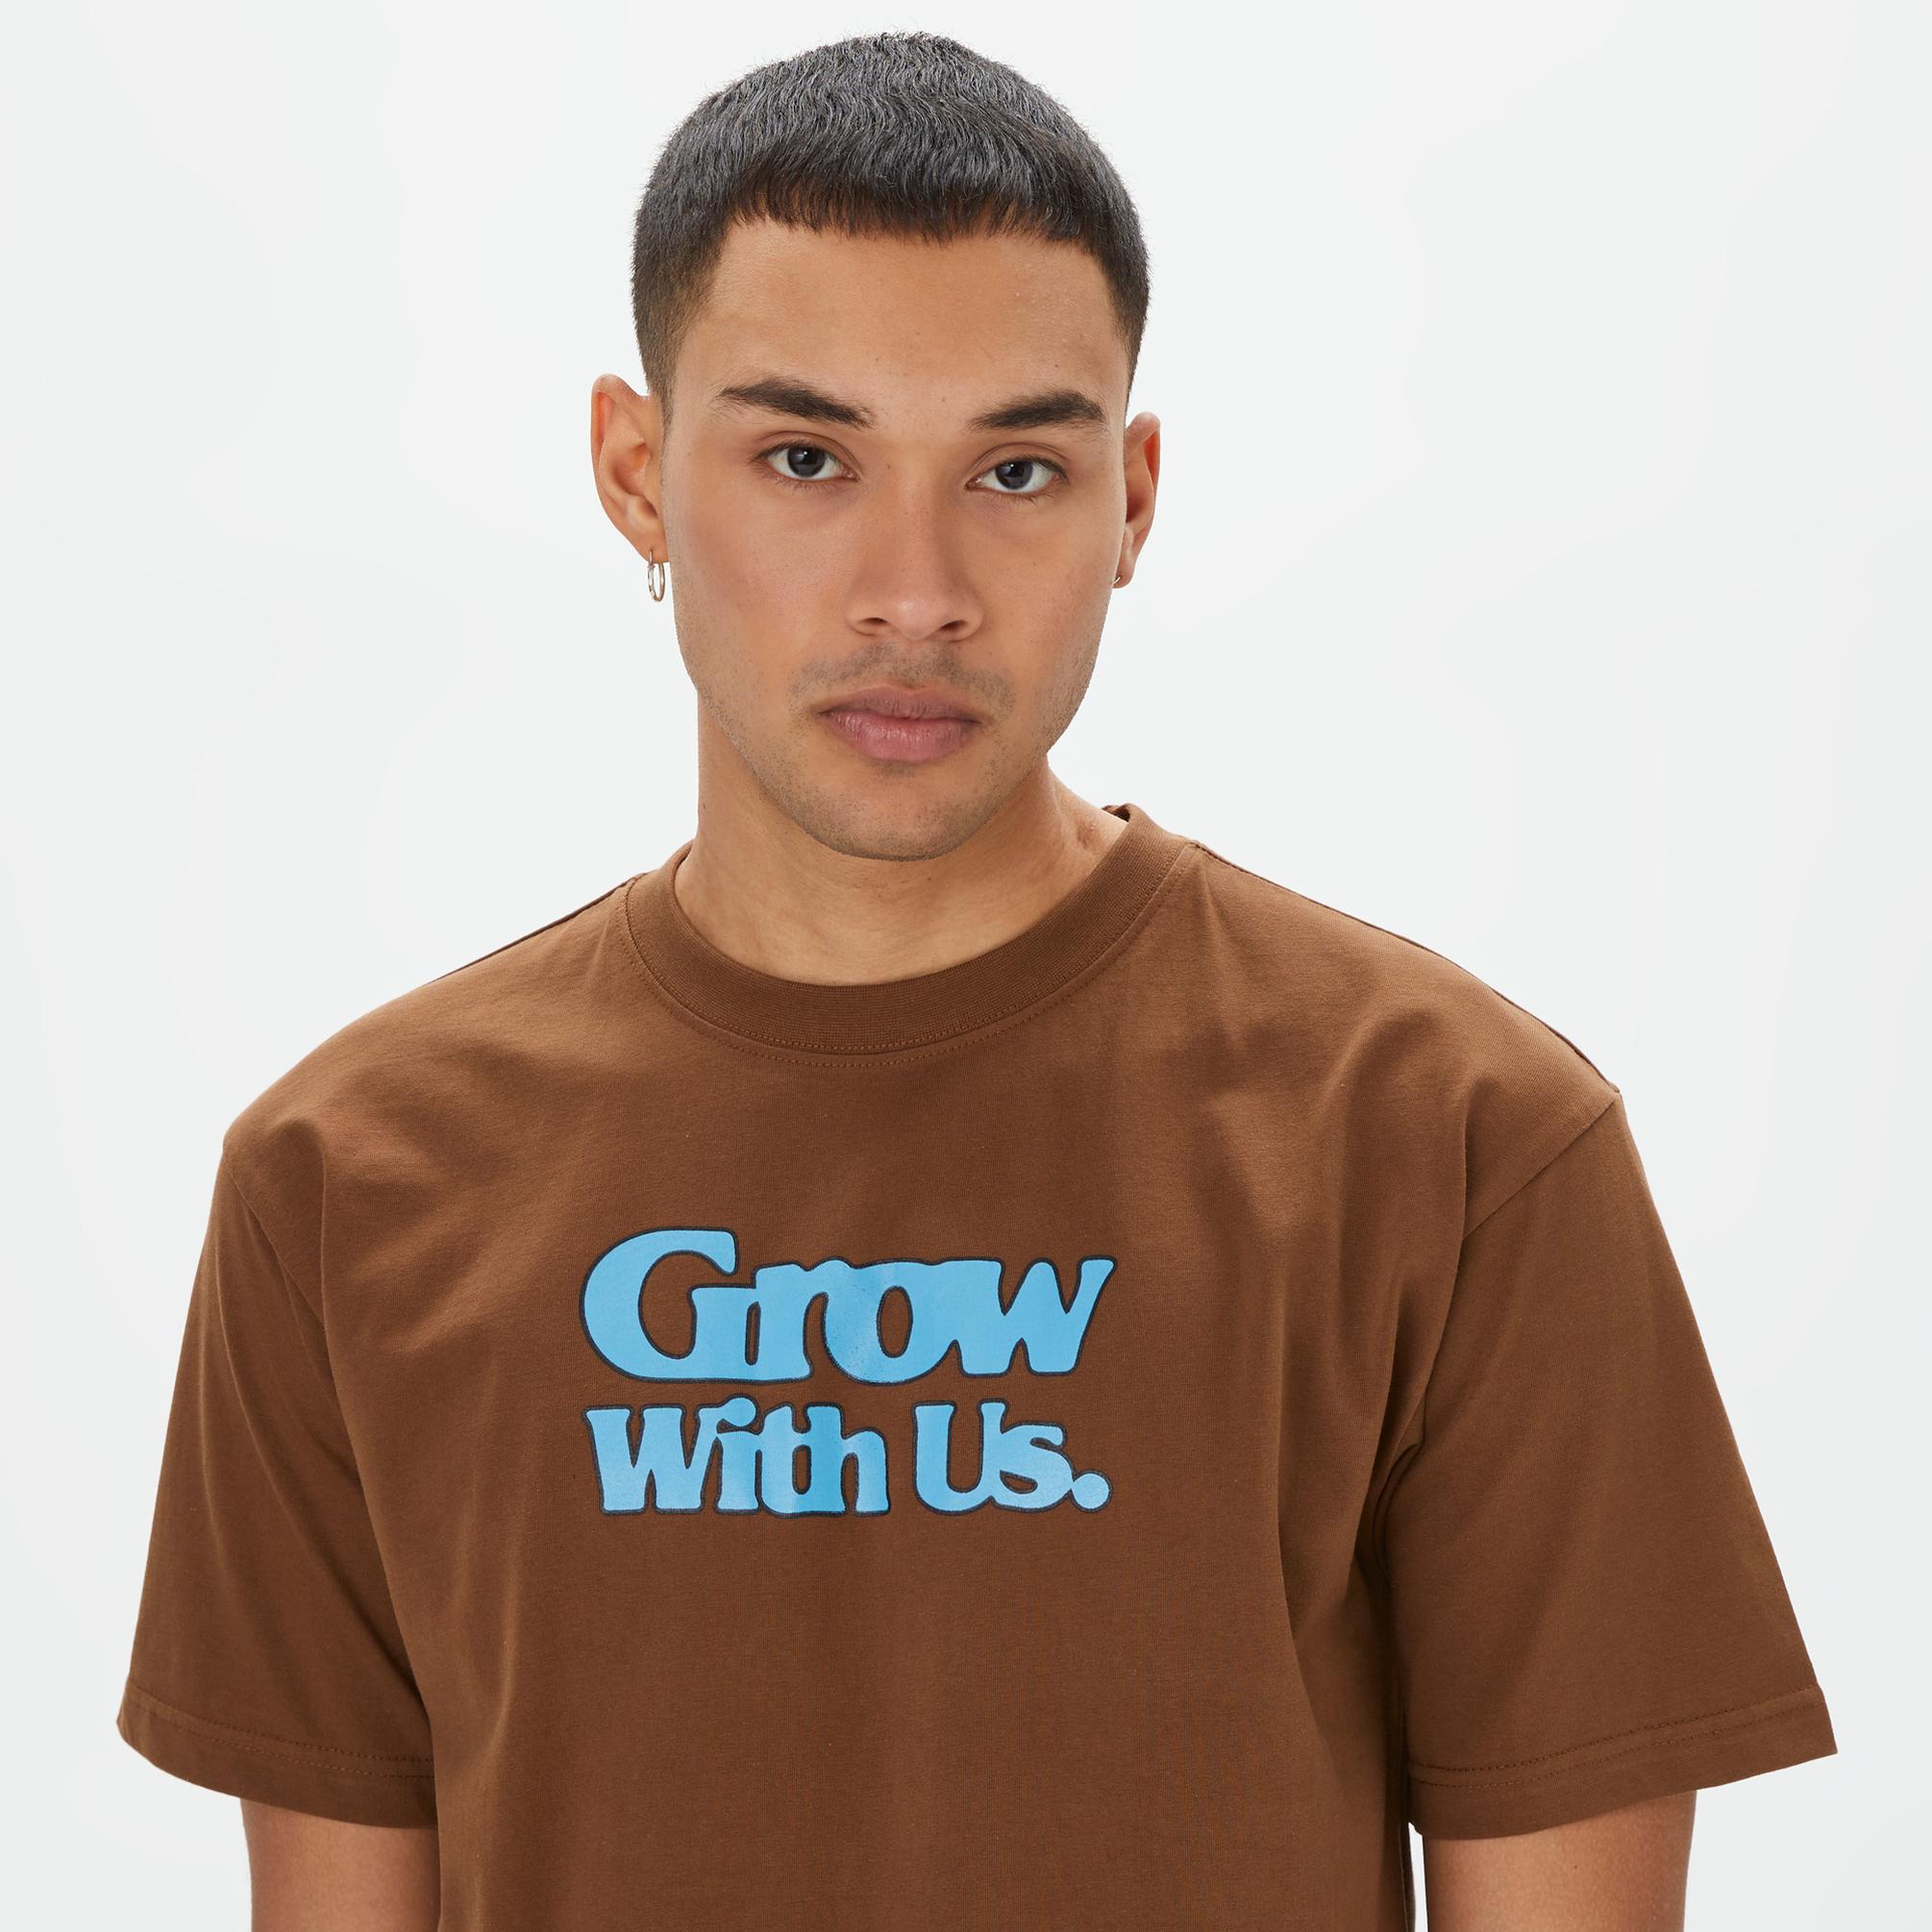  Market Grow With Us Erkek Kahverengi T-Shirt